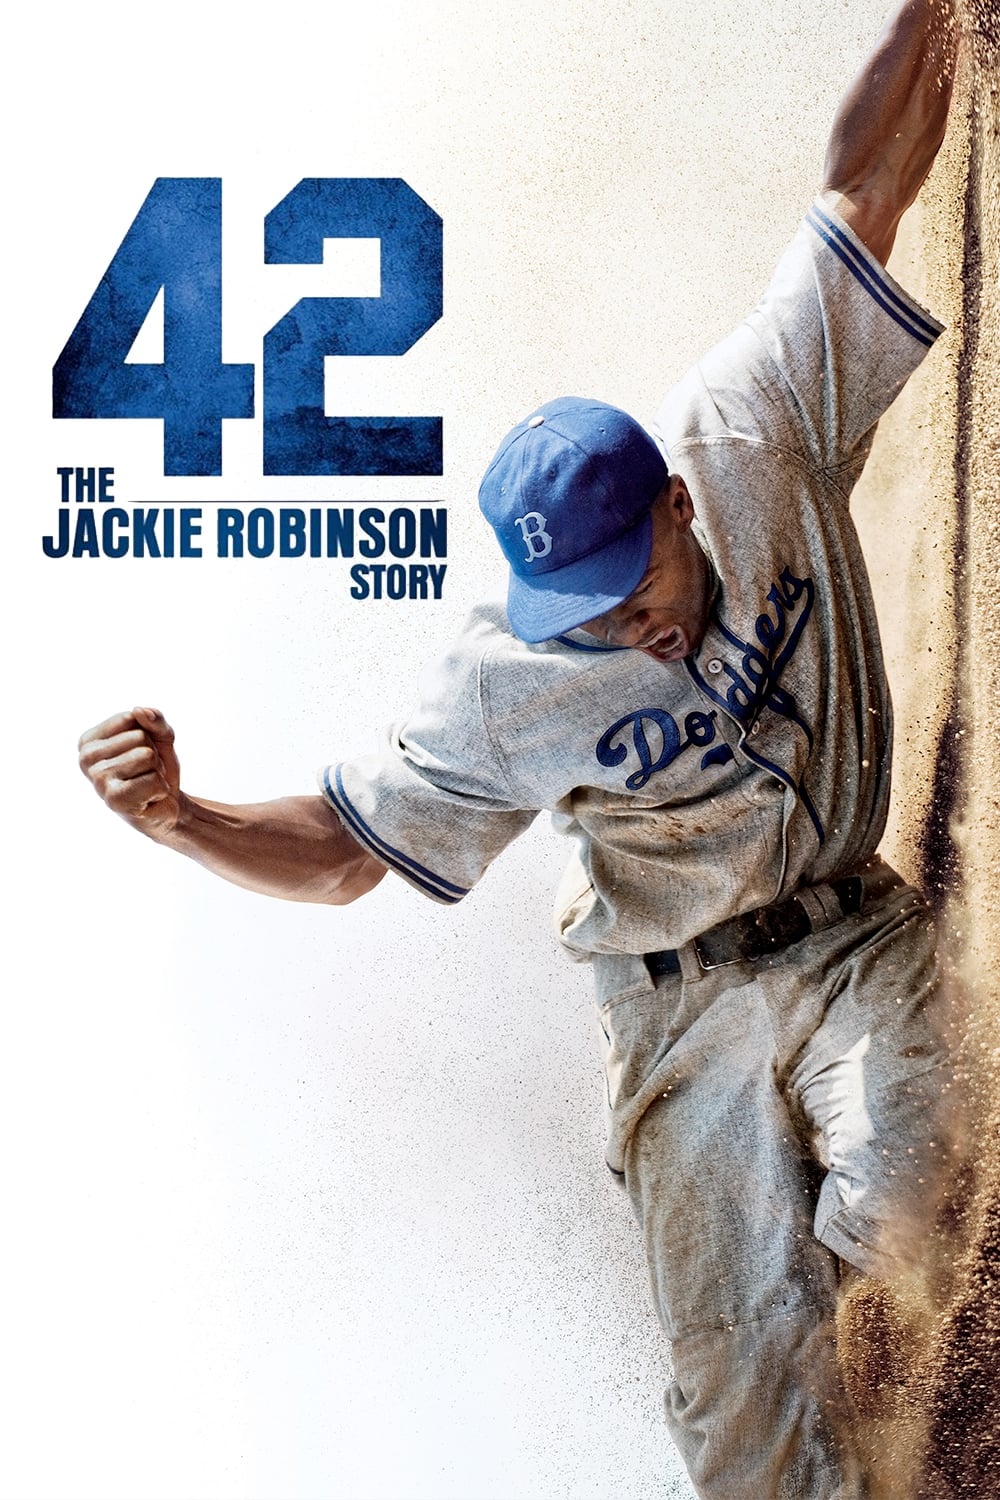 42 Movie poster